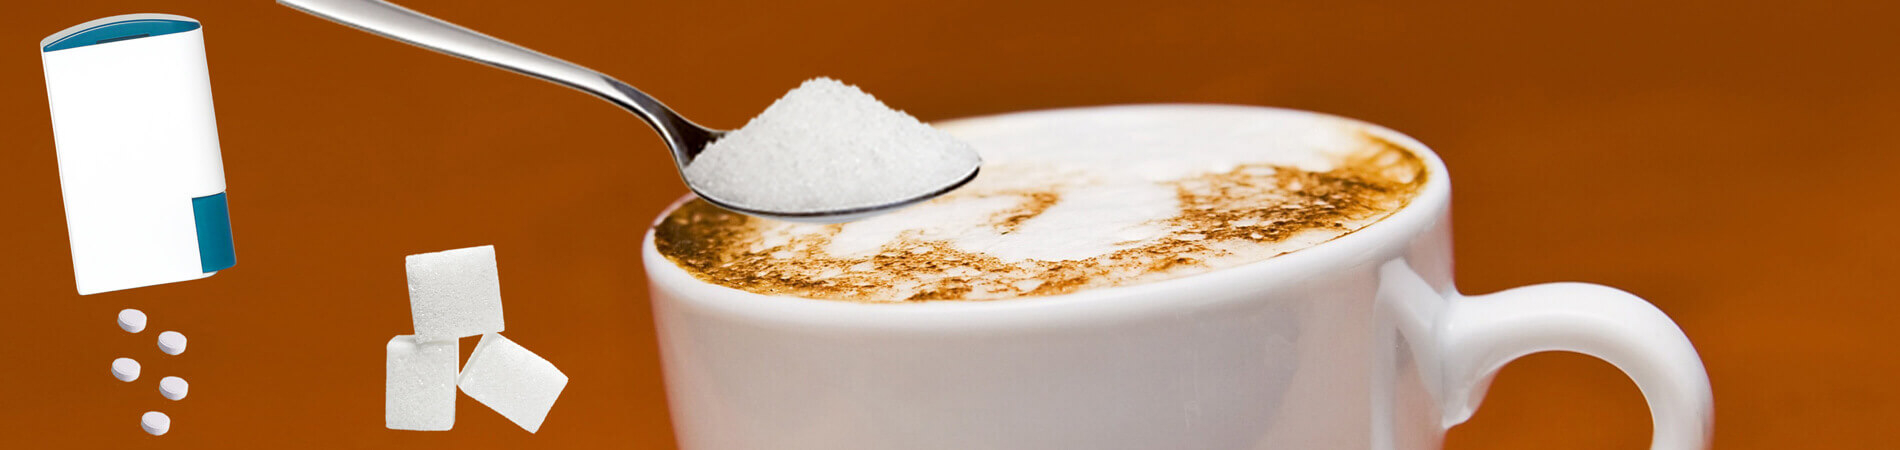 Sweet and healthy? Beware of sugar alternatives. A...